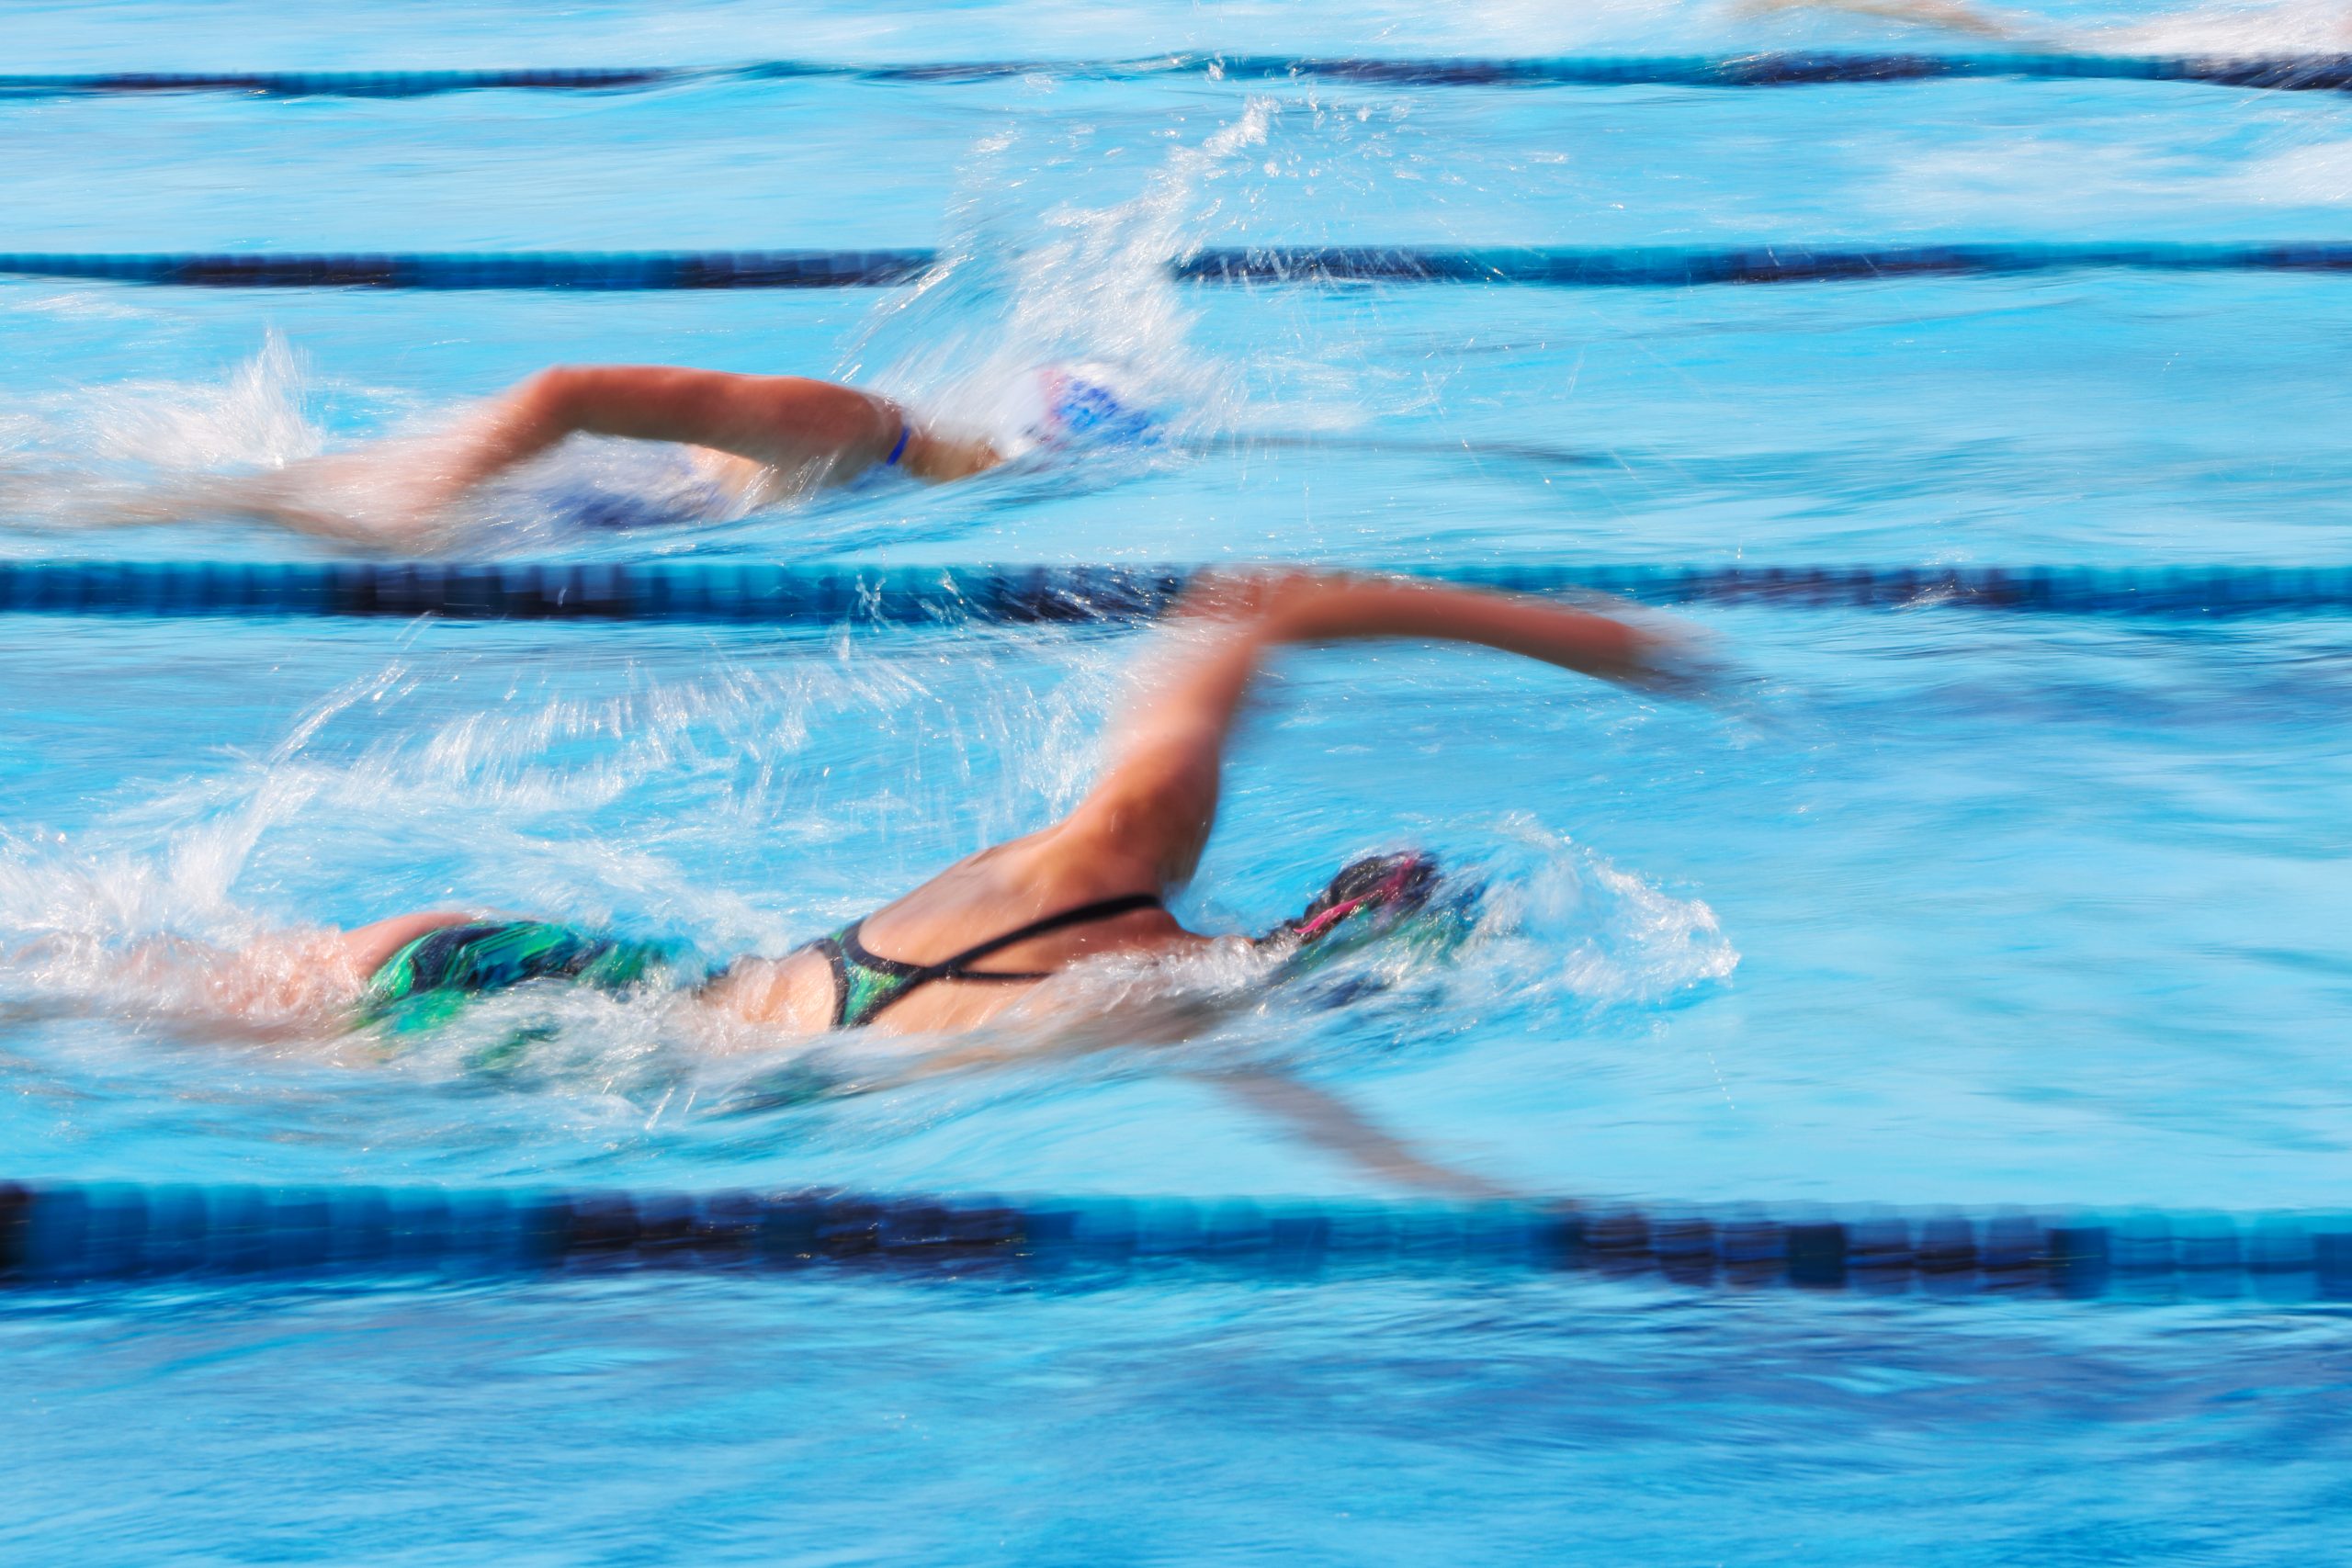 swimmer in water arm raised mid swim